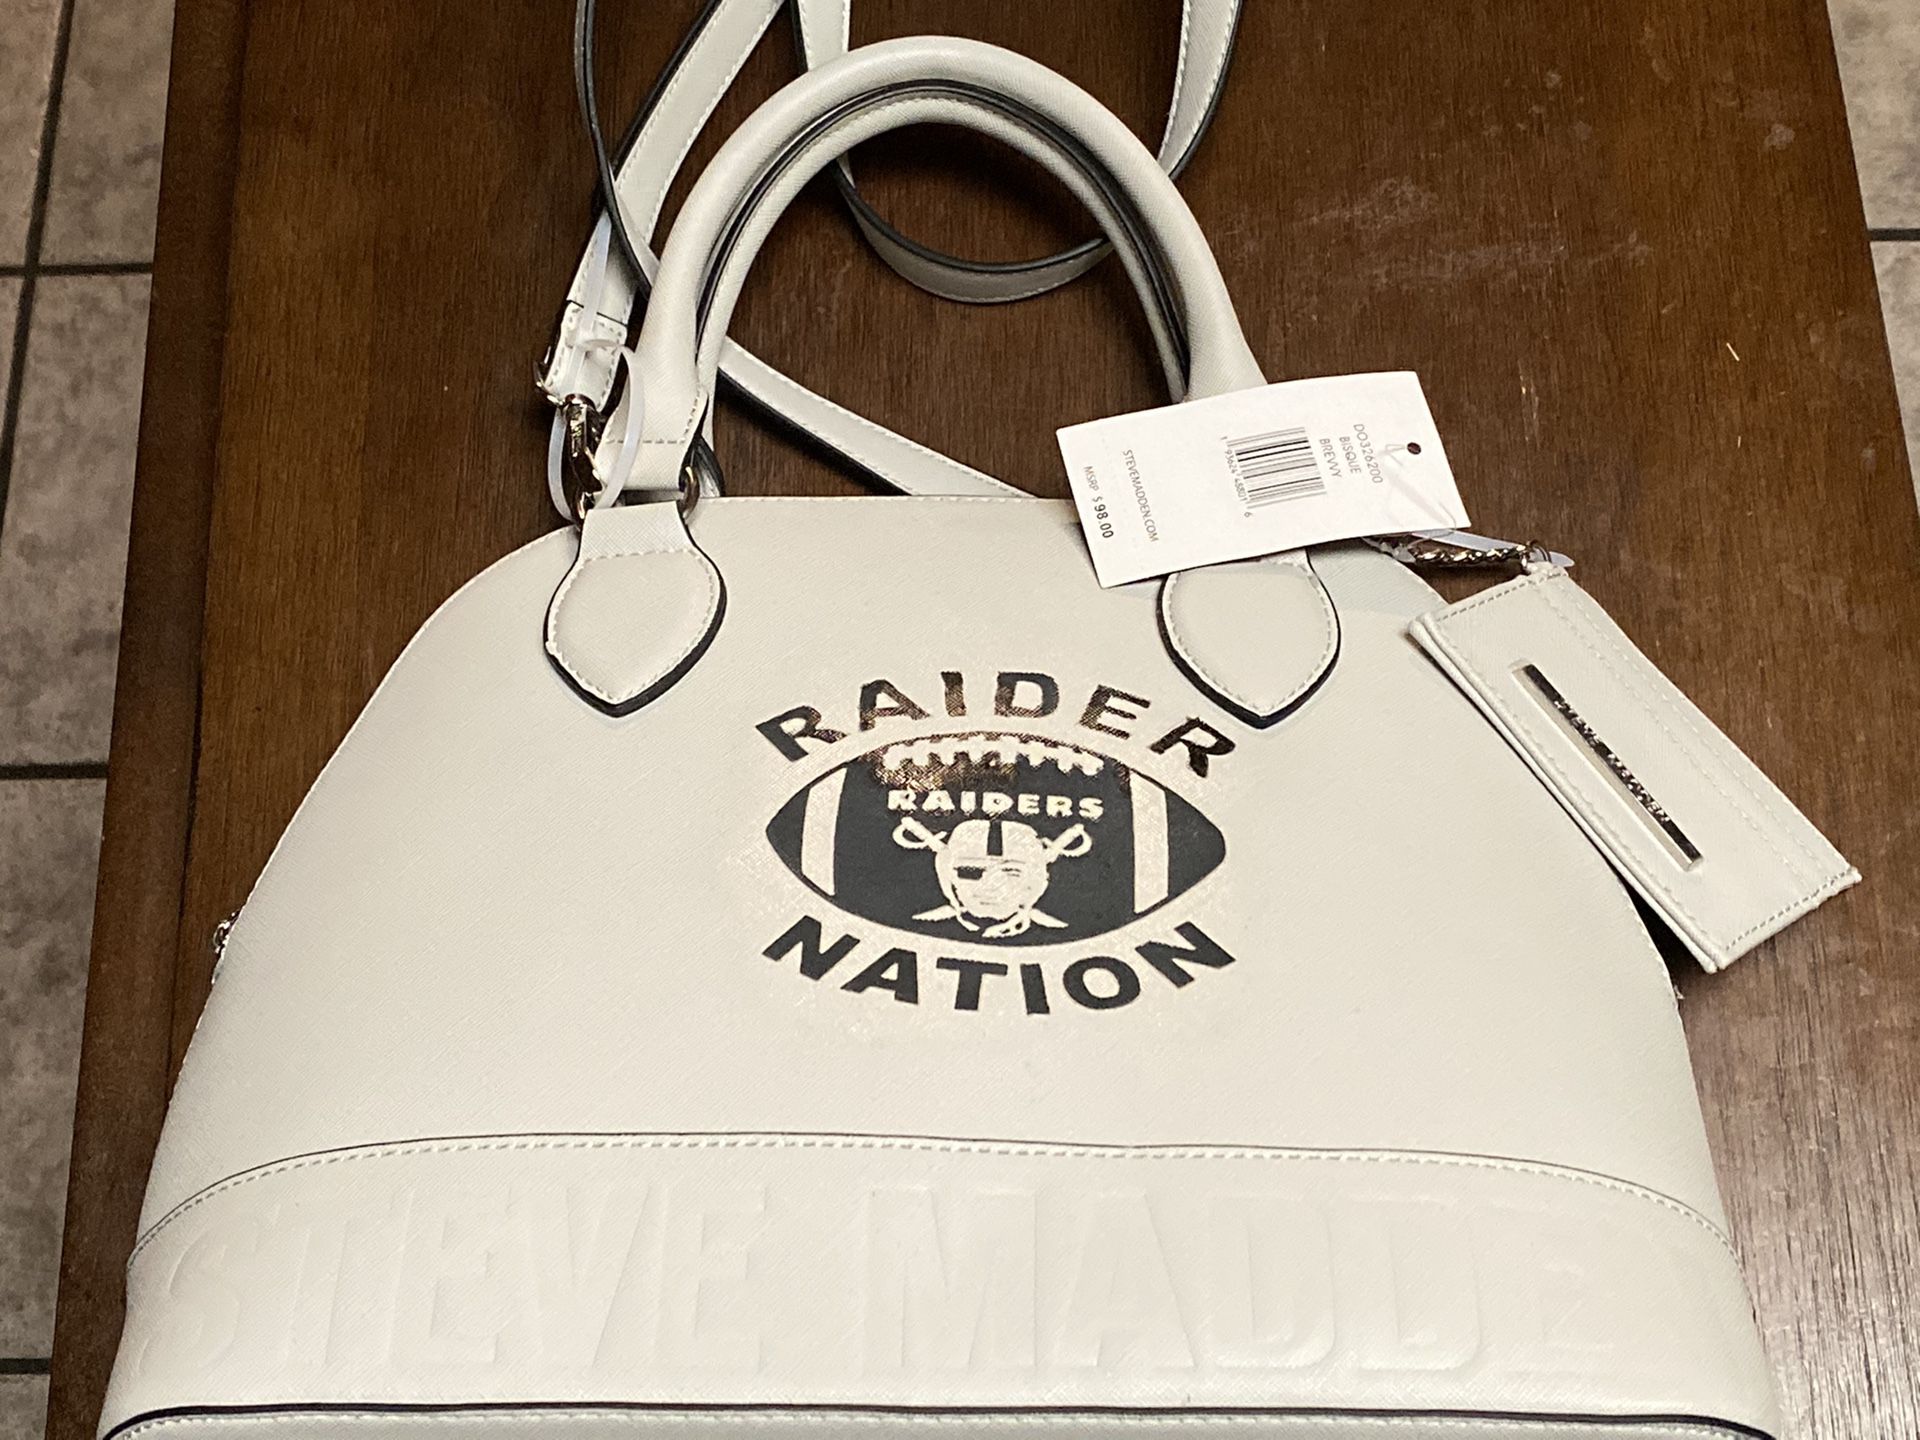 Raiders Steve Madden purse